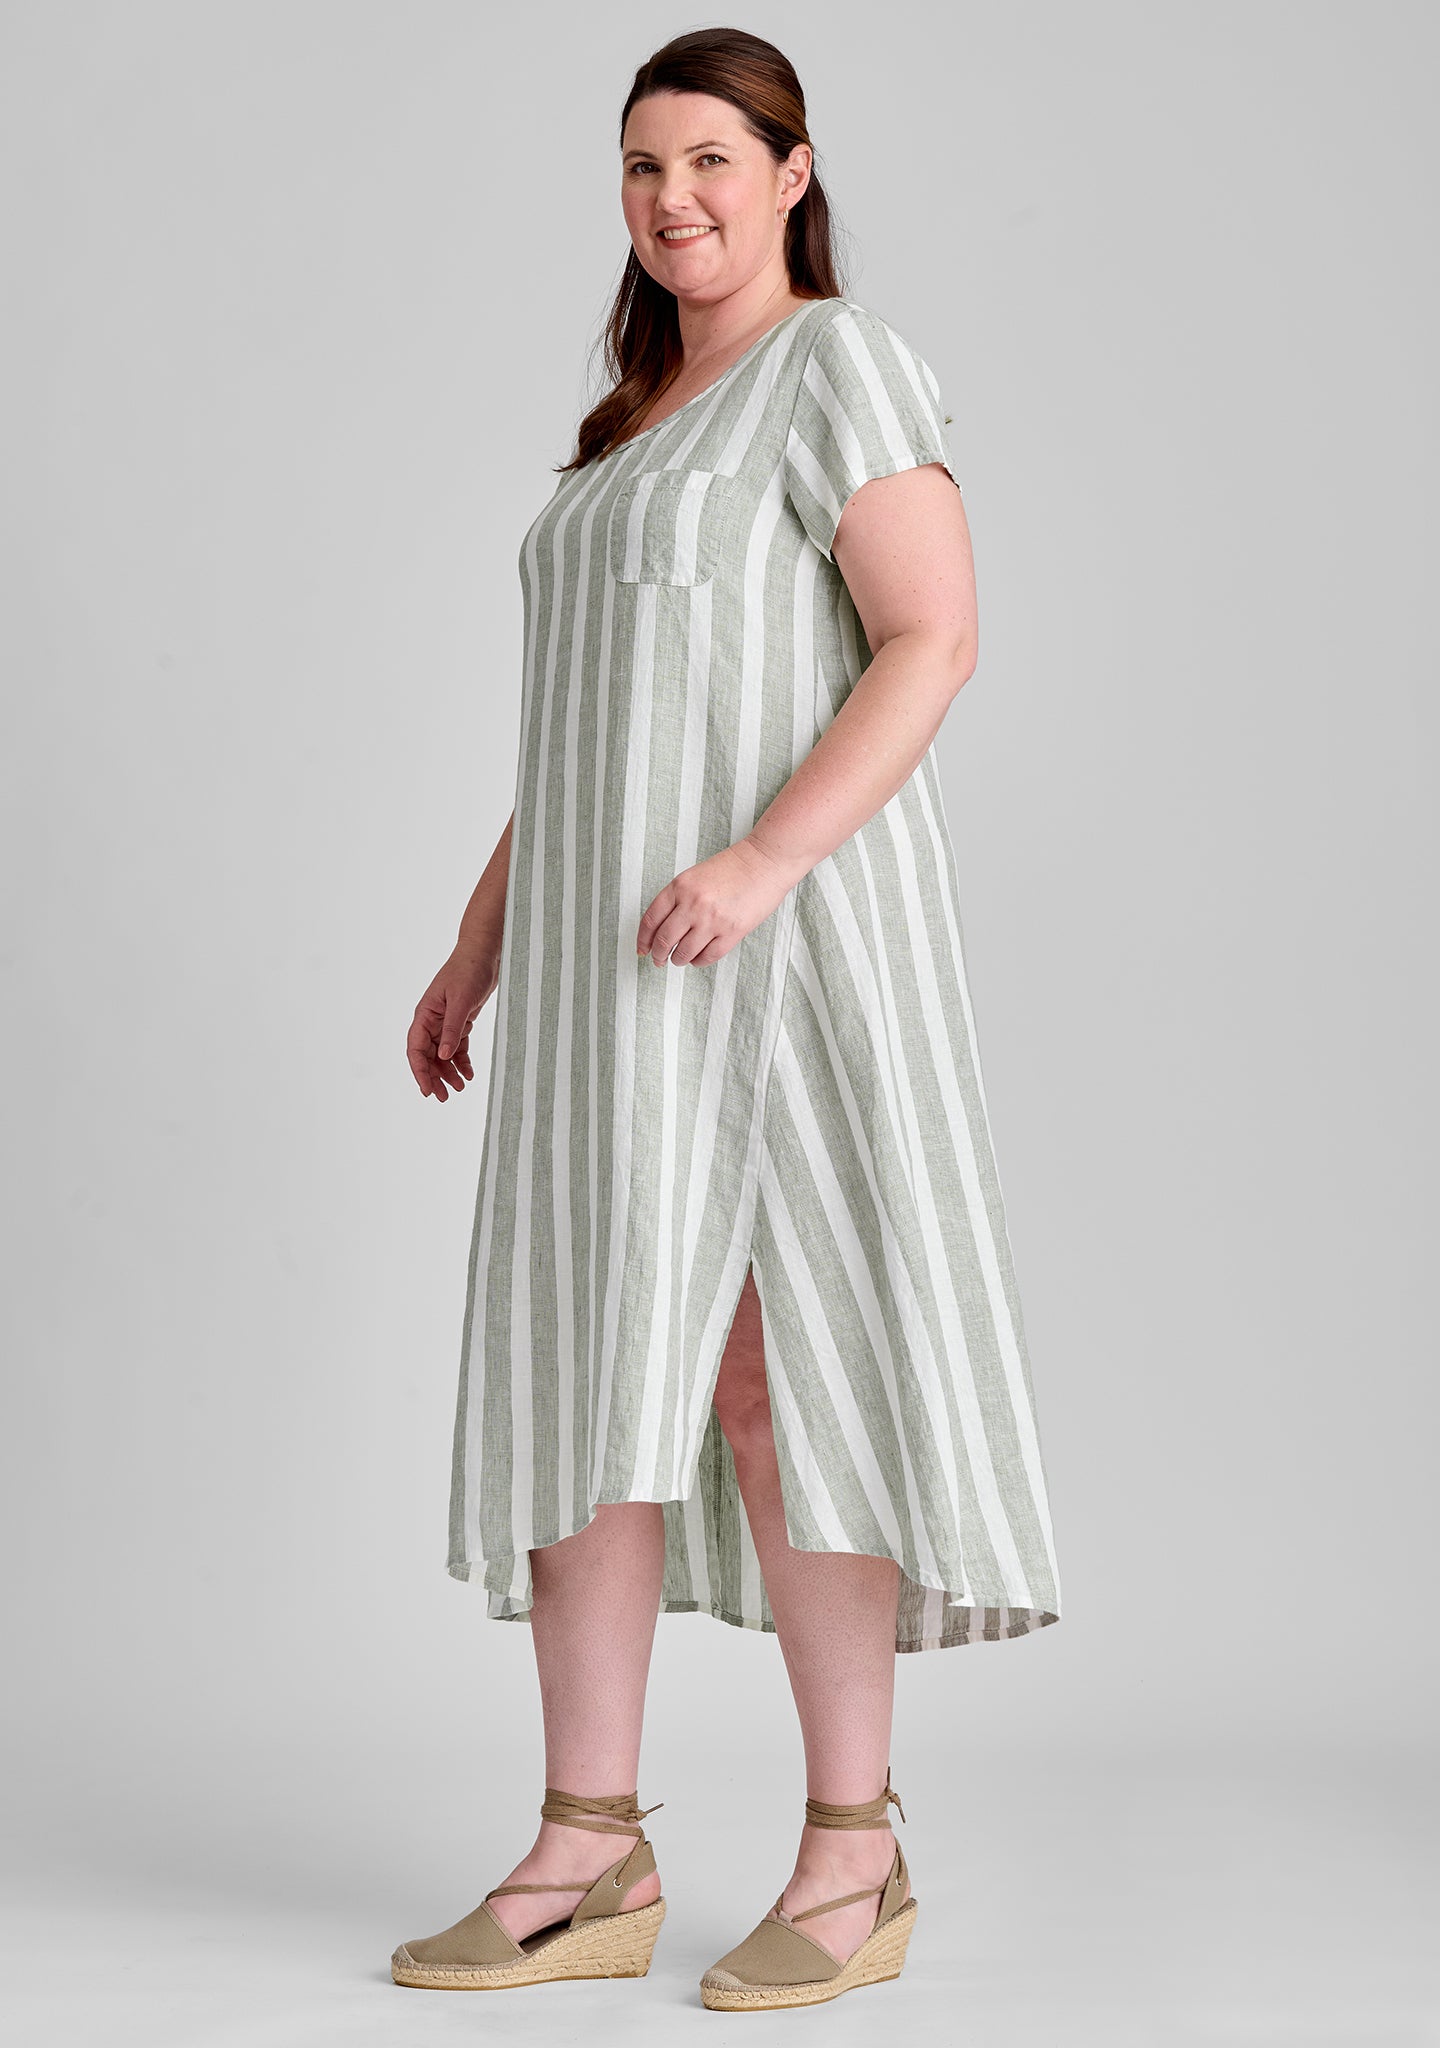 stretched top linen shift dress details